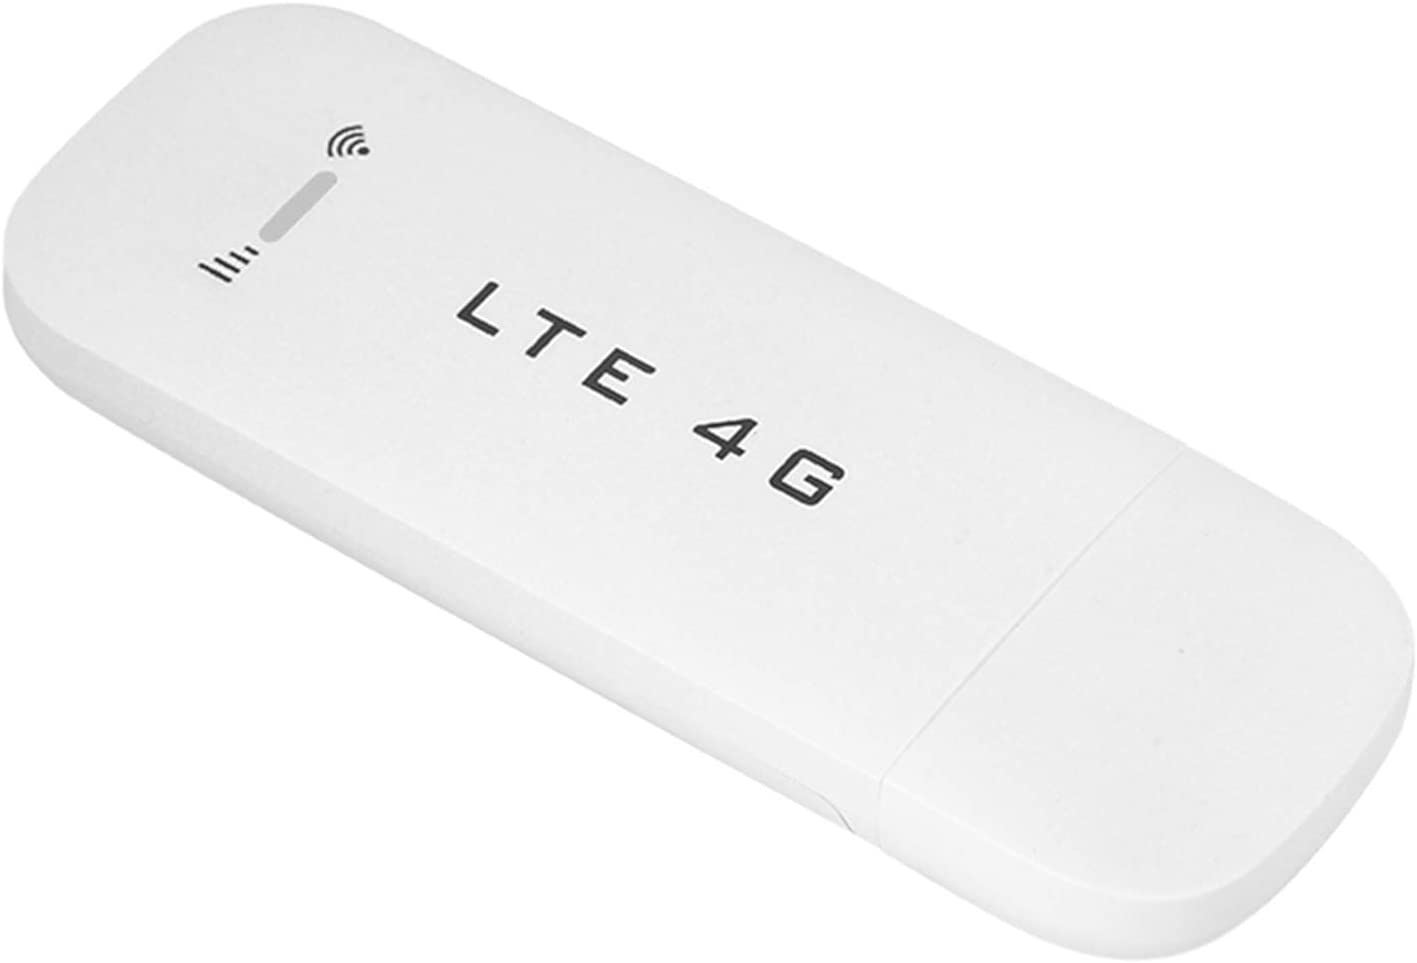 ASHATA LTE Surfstick USB Surfstick, 100 Mbps USB Dongle 4G/3G WiFi Router Wireless Network Hotspot